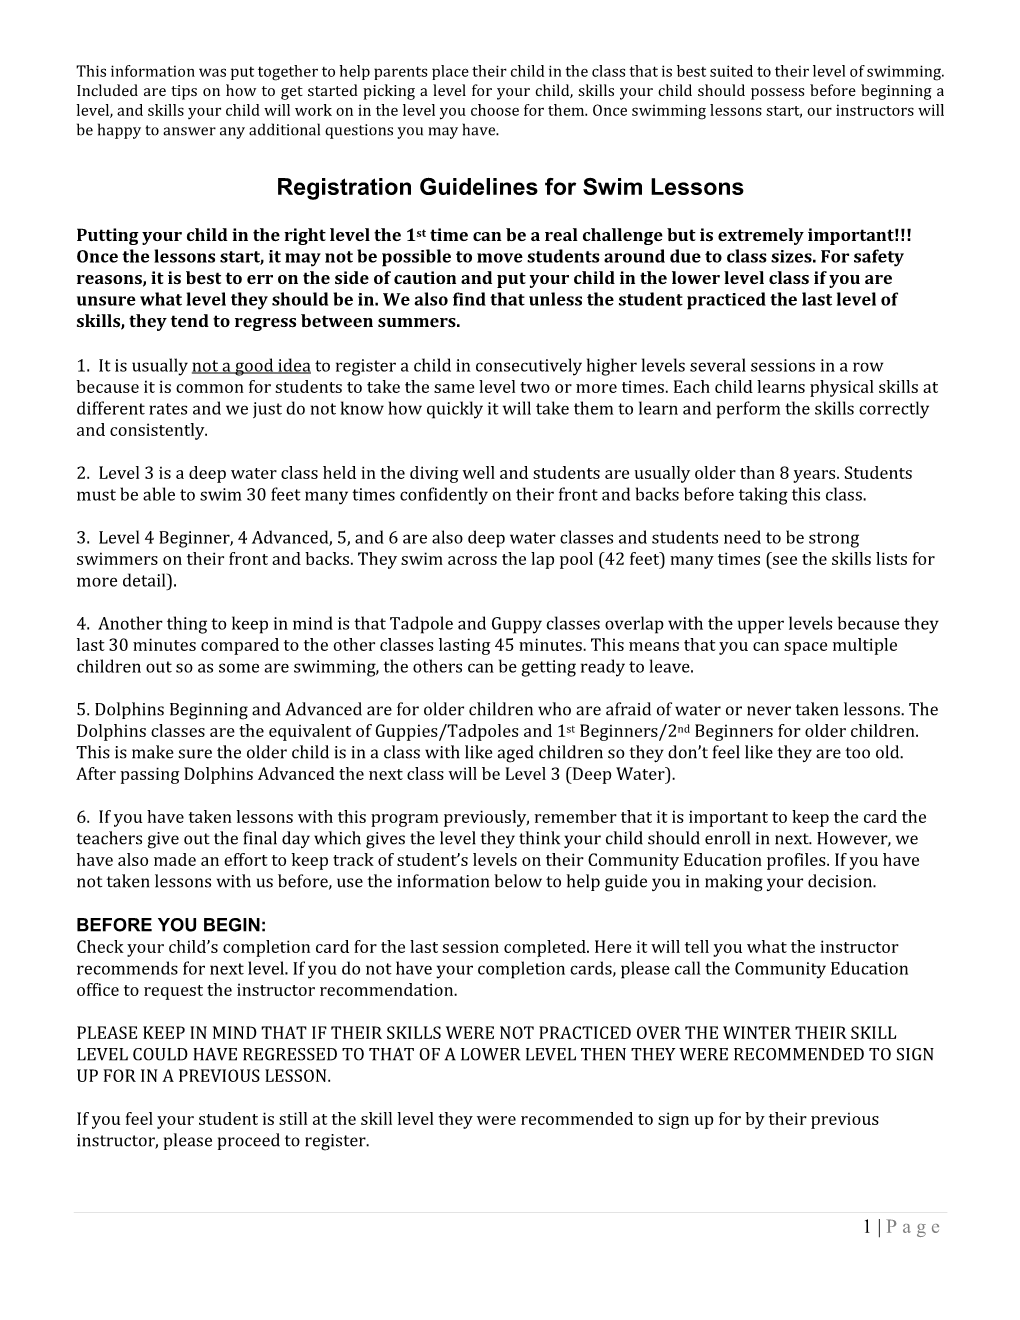 Registration Guidelines for Swim Lessons